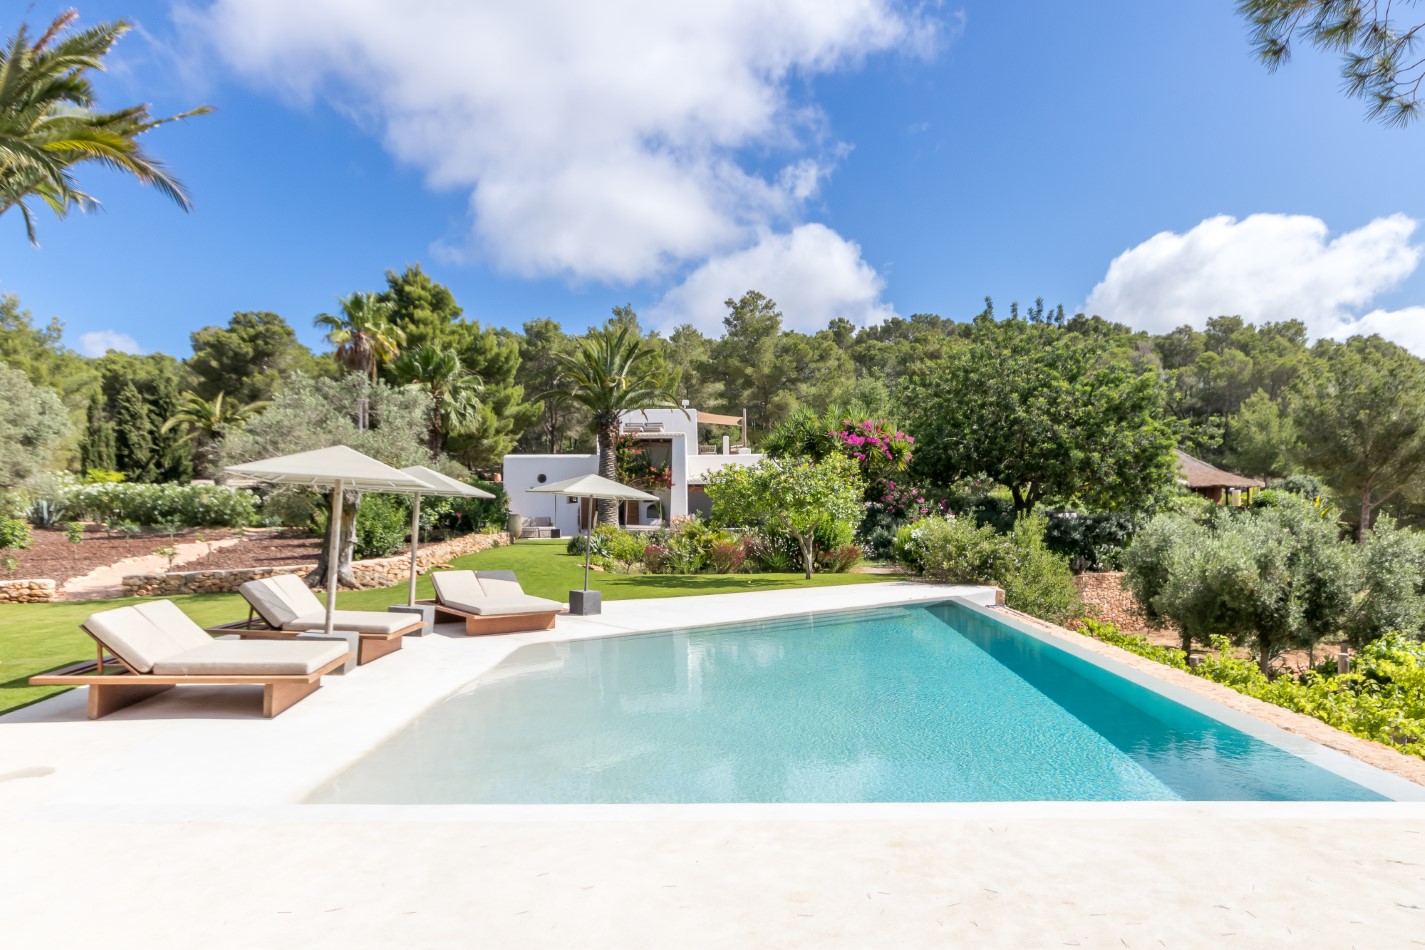 Finca Rural Luxus Ferienhaus Ibiza Mieten Ansicht Anwesen